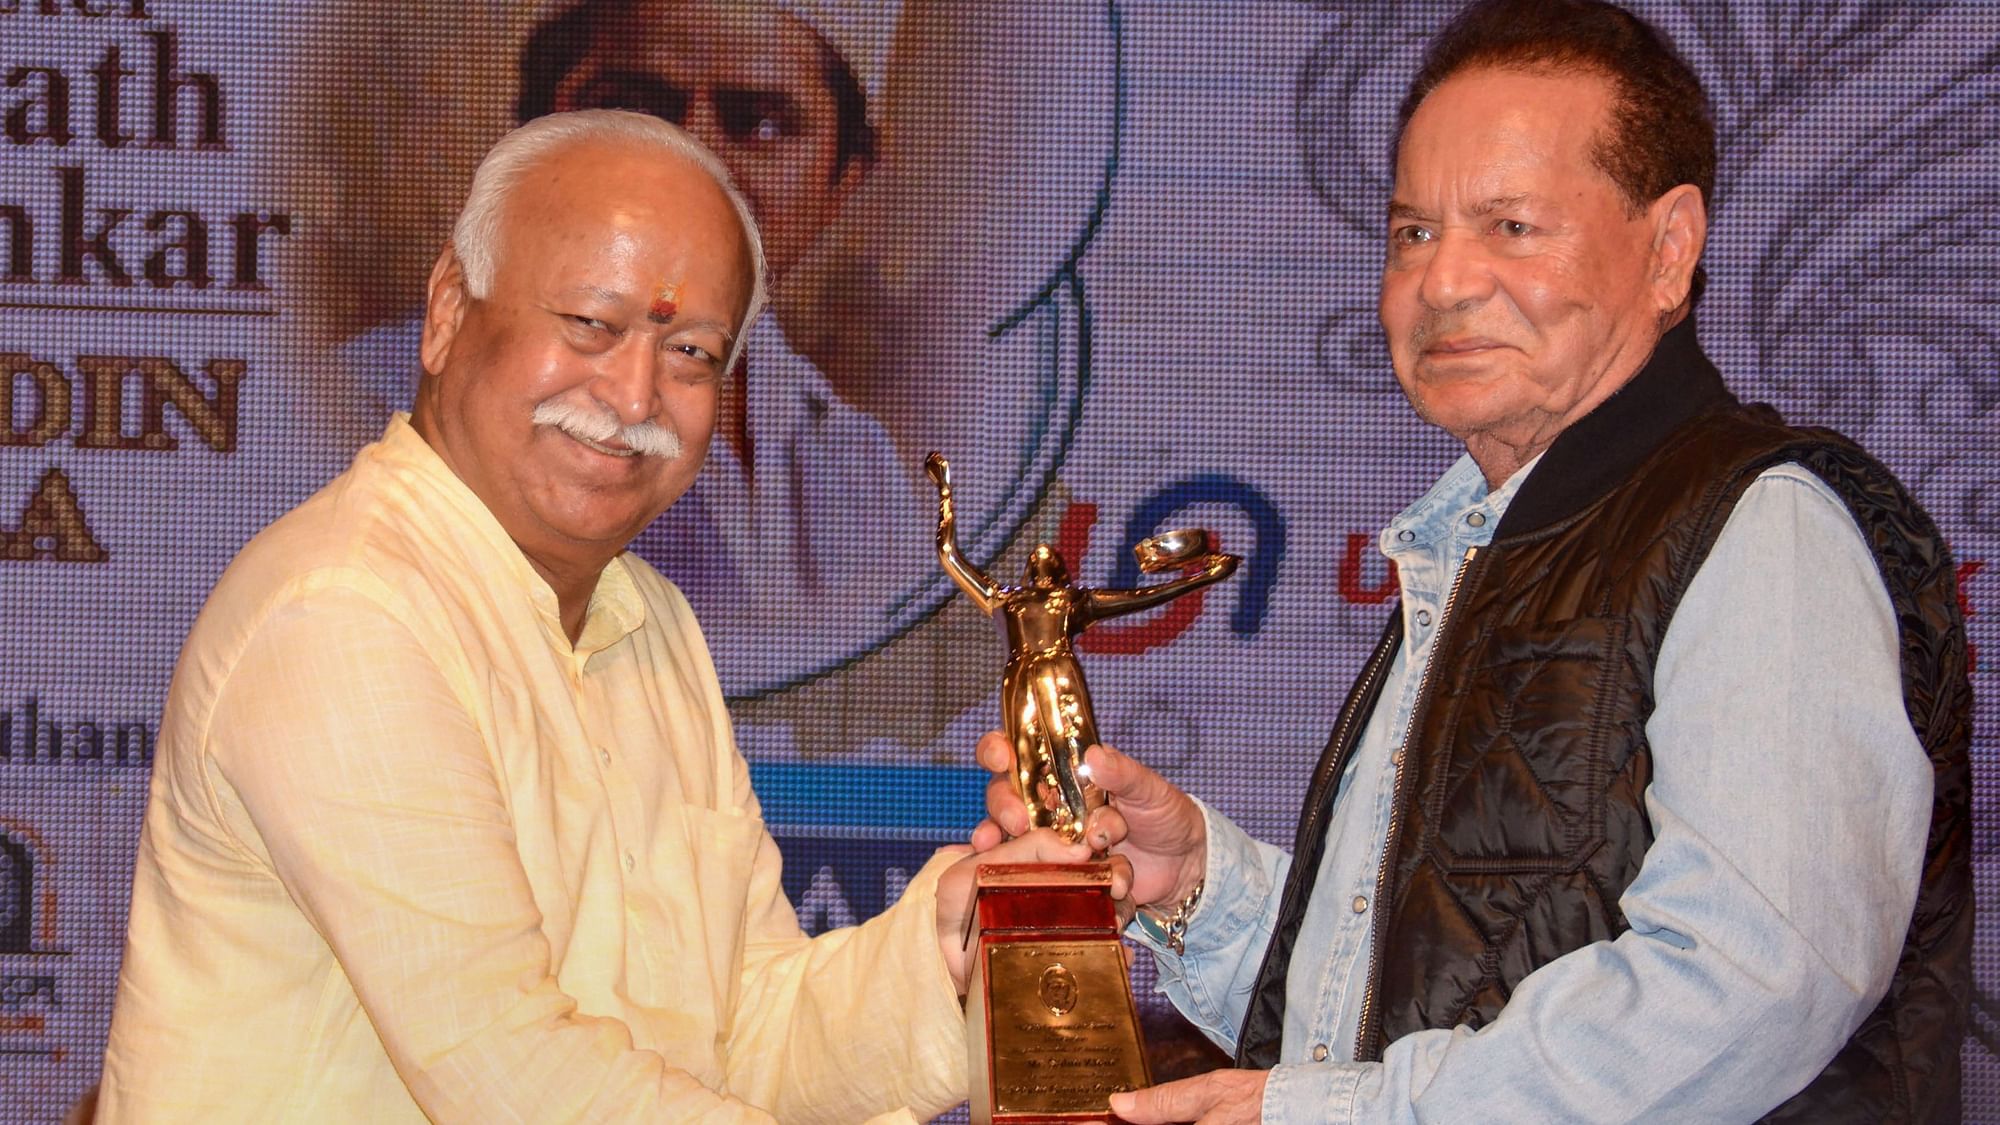 Rashtriya Swayamsevak Sangh chief Mohan Bhagwat presented the award to Khan at an event in Mumbai.